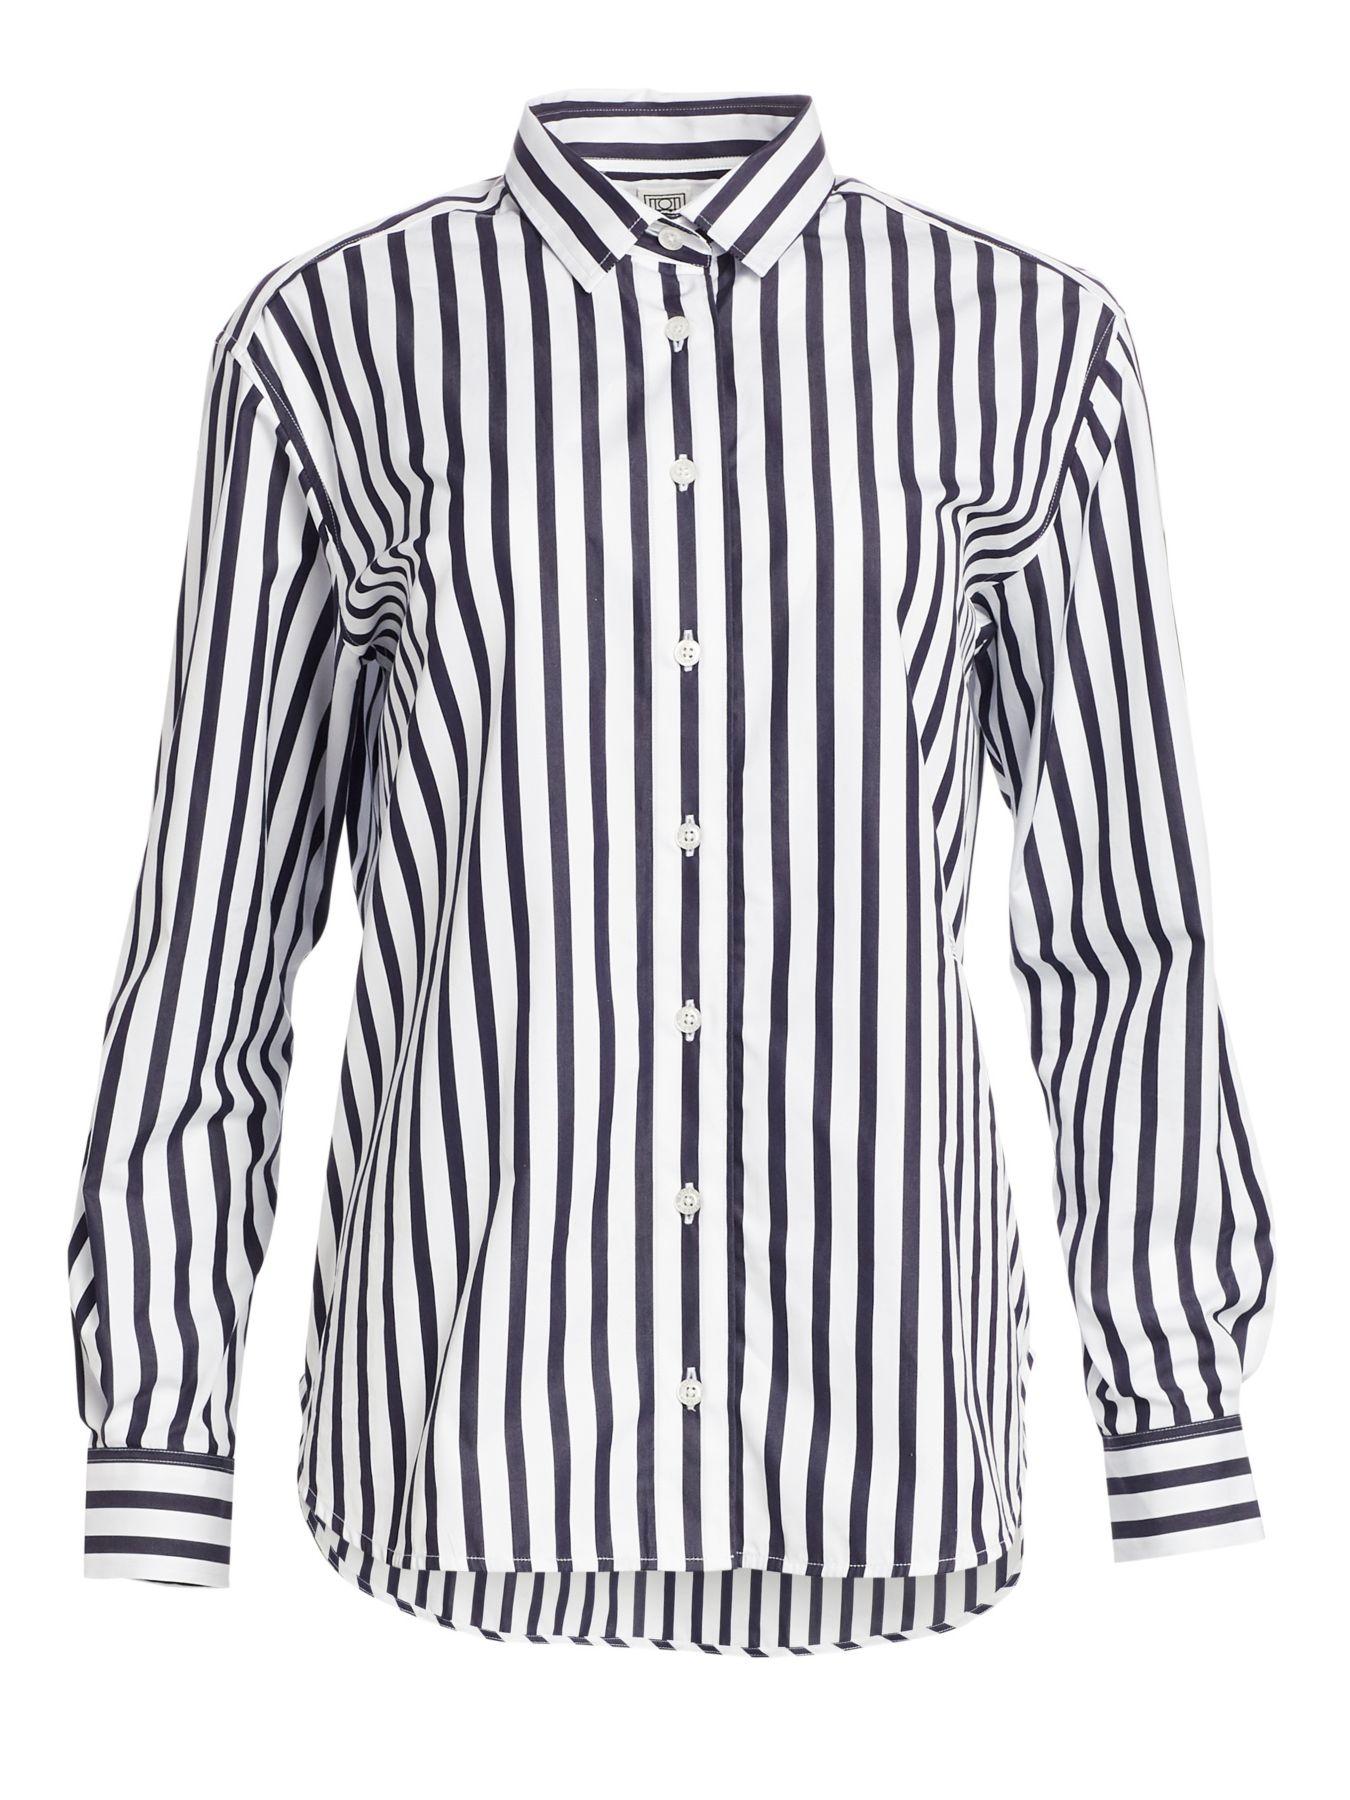 Totême Totême Capri Striped Cotton Shirt in Blue | Lyst